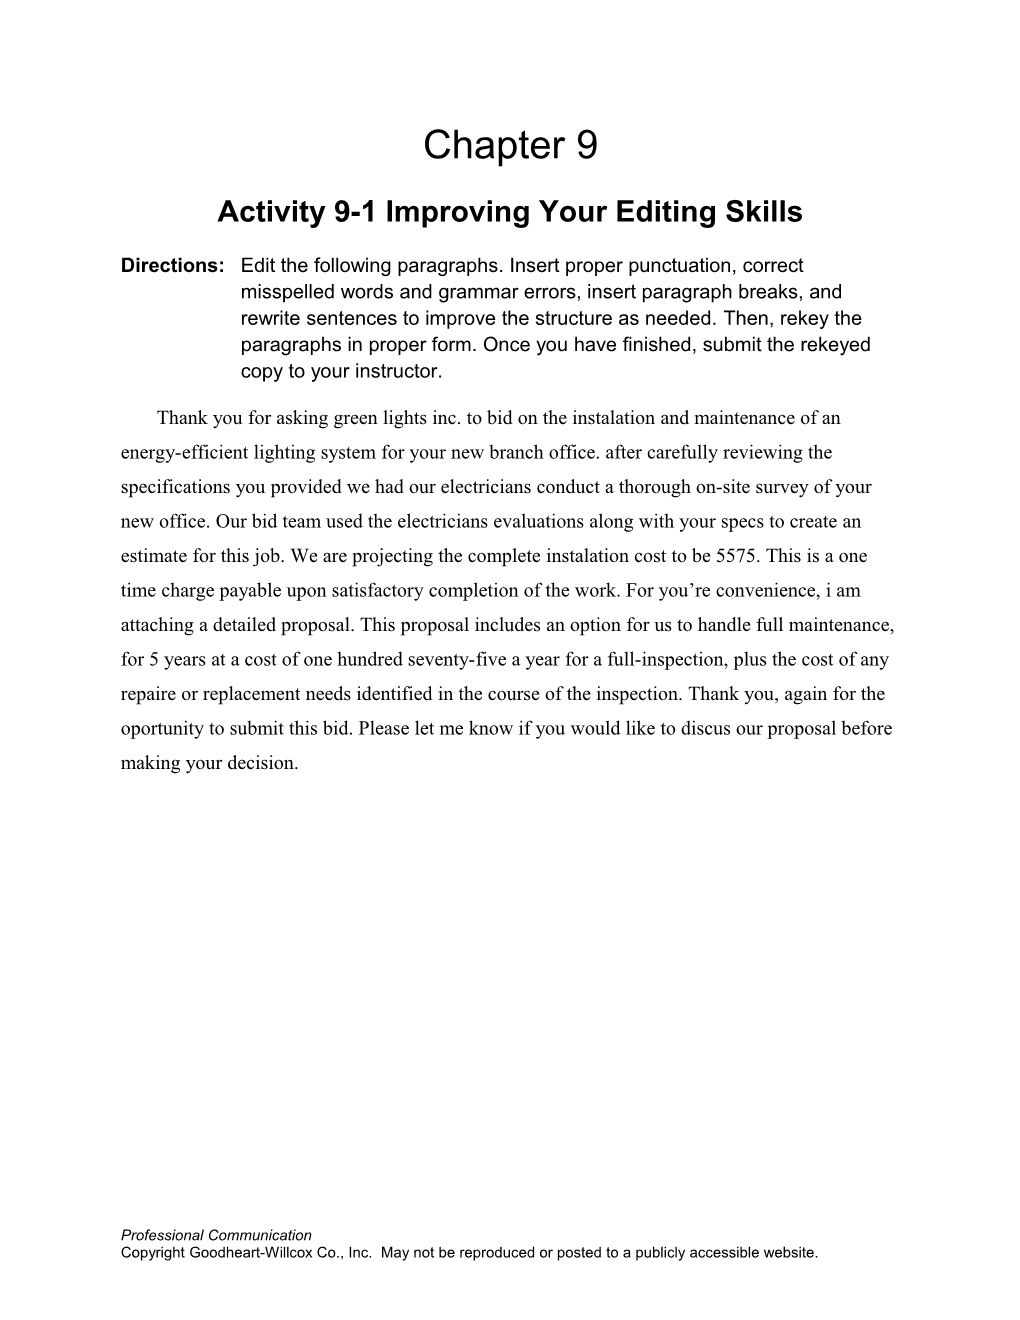 Activity 9-1 Improving Your Editing Skills